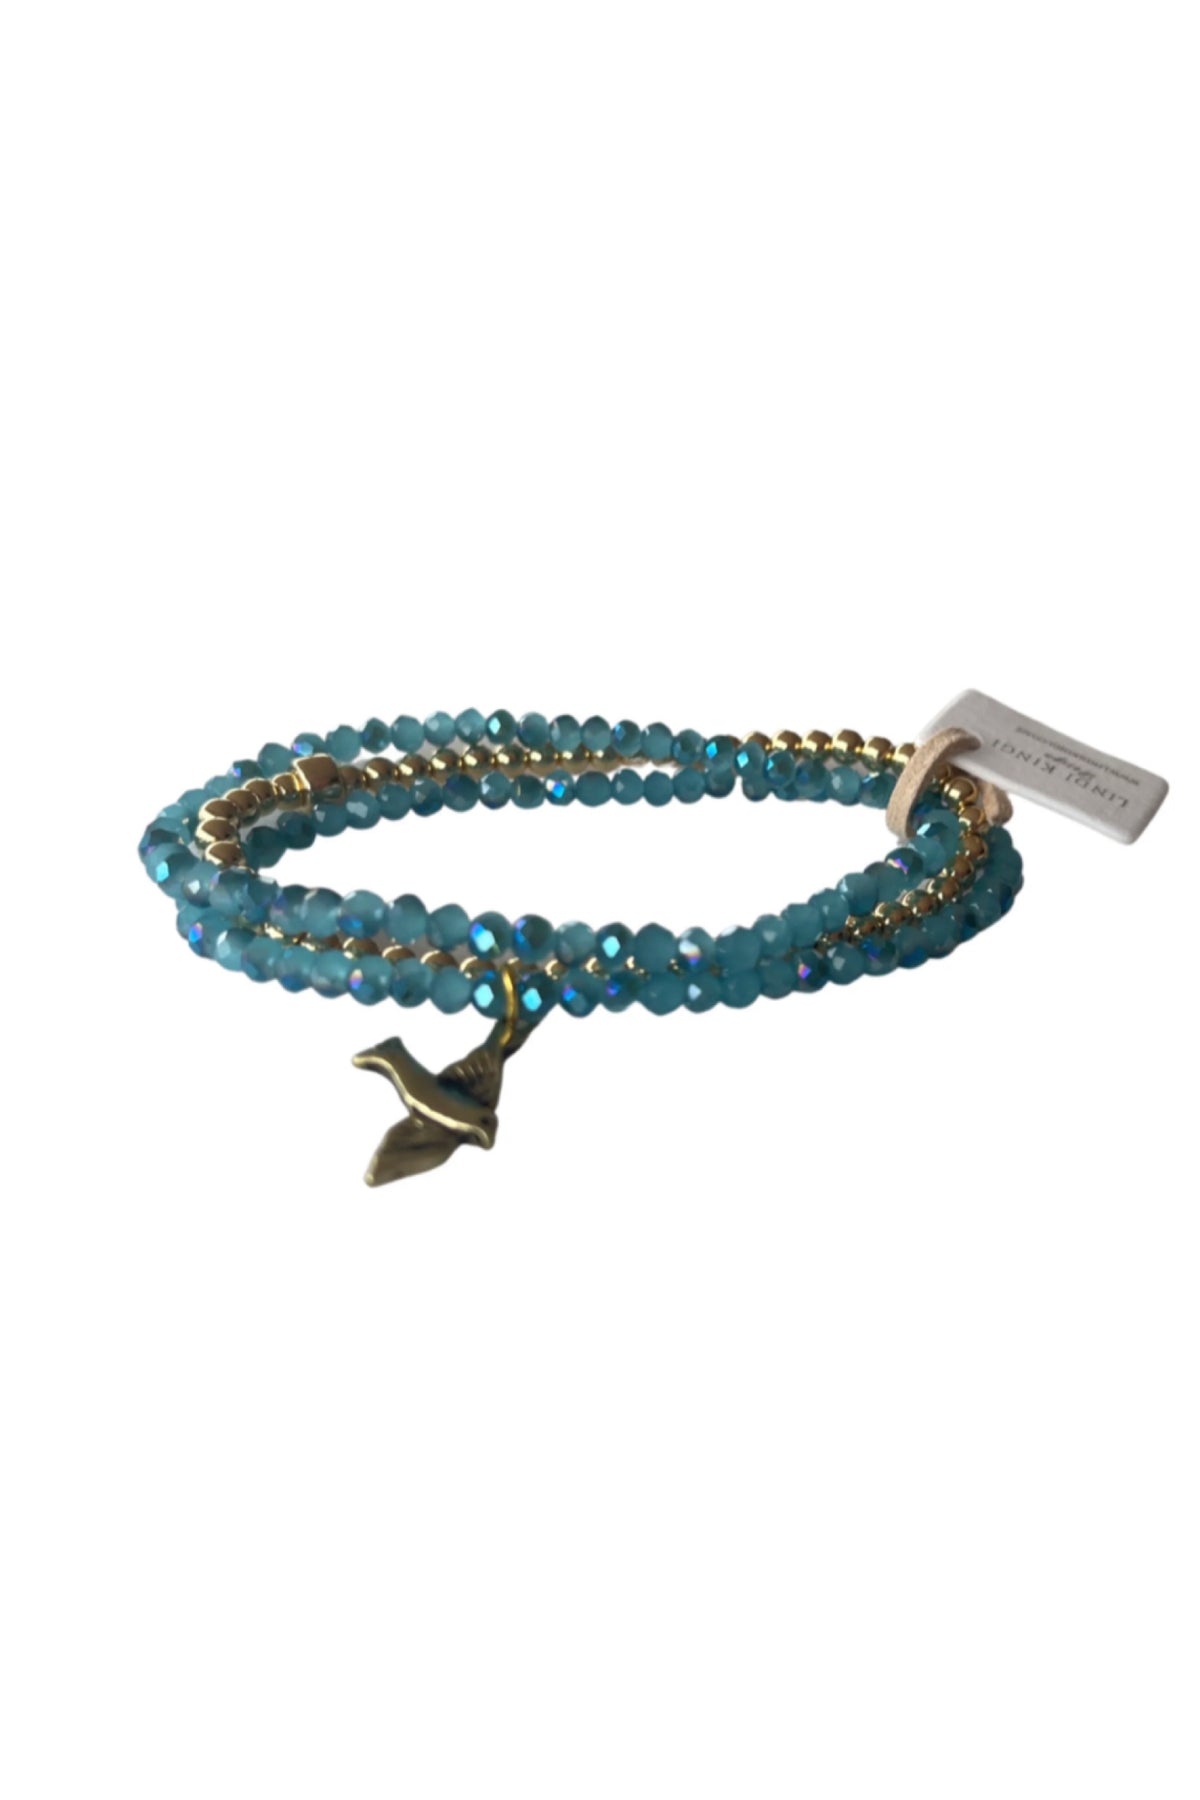 Iridescent Blue and Gold 4mm Beaded Bracelet Set